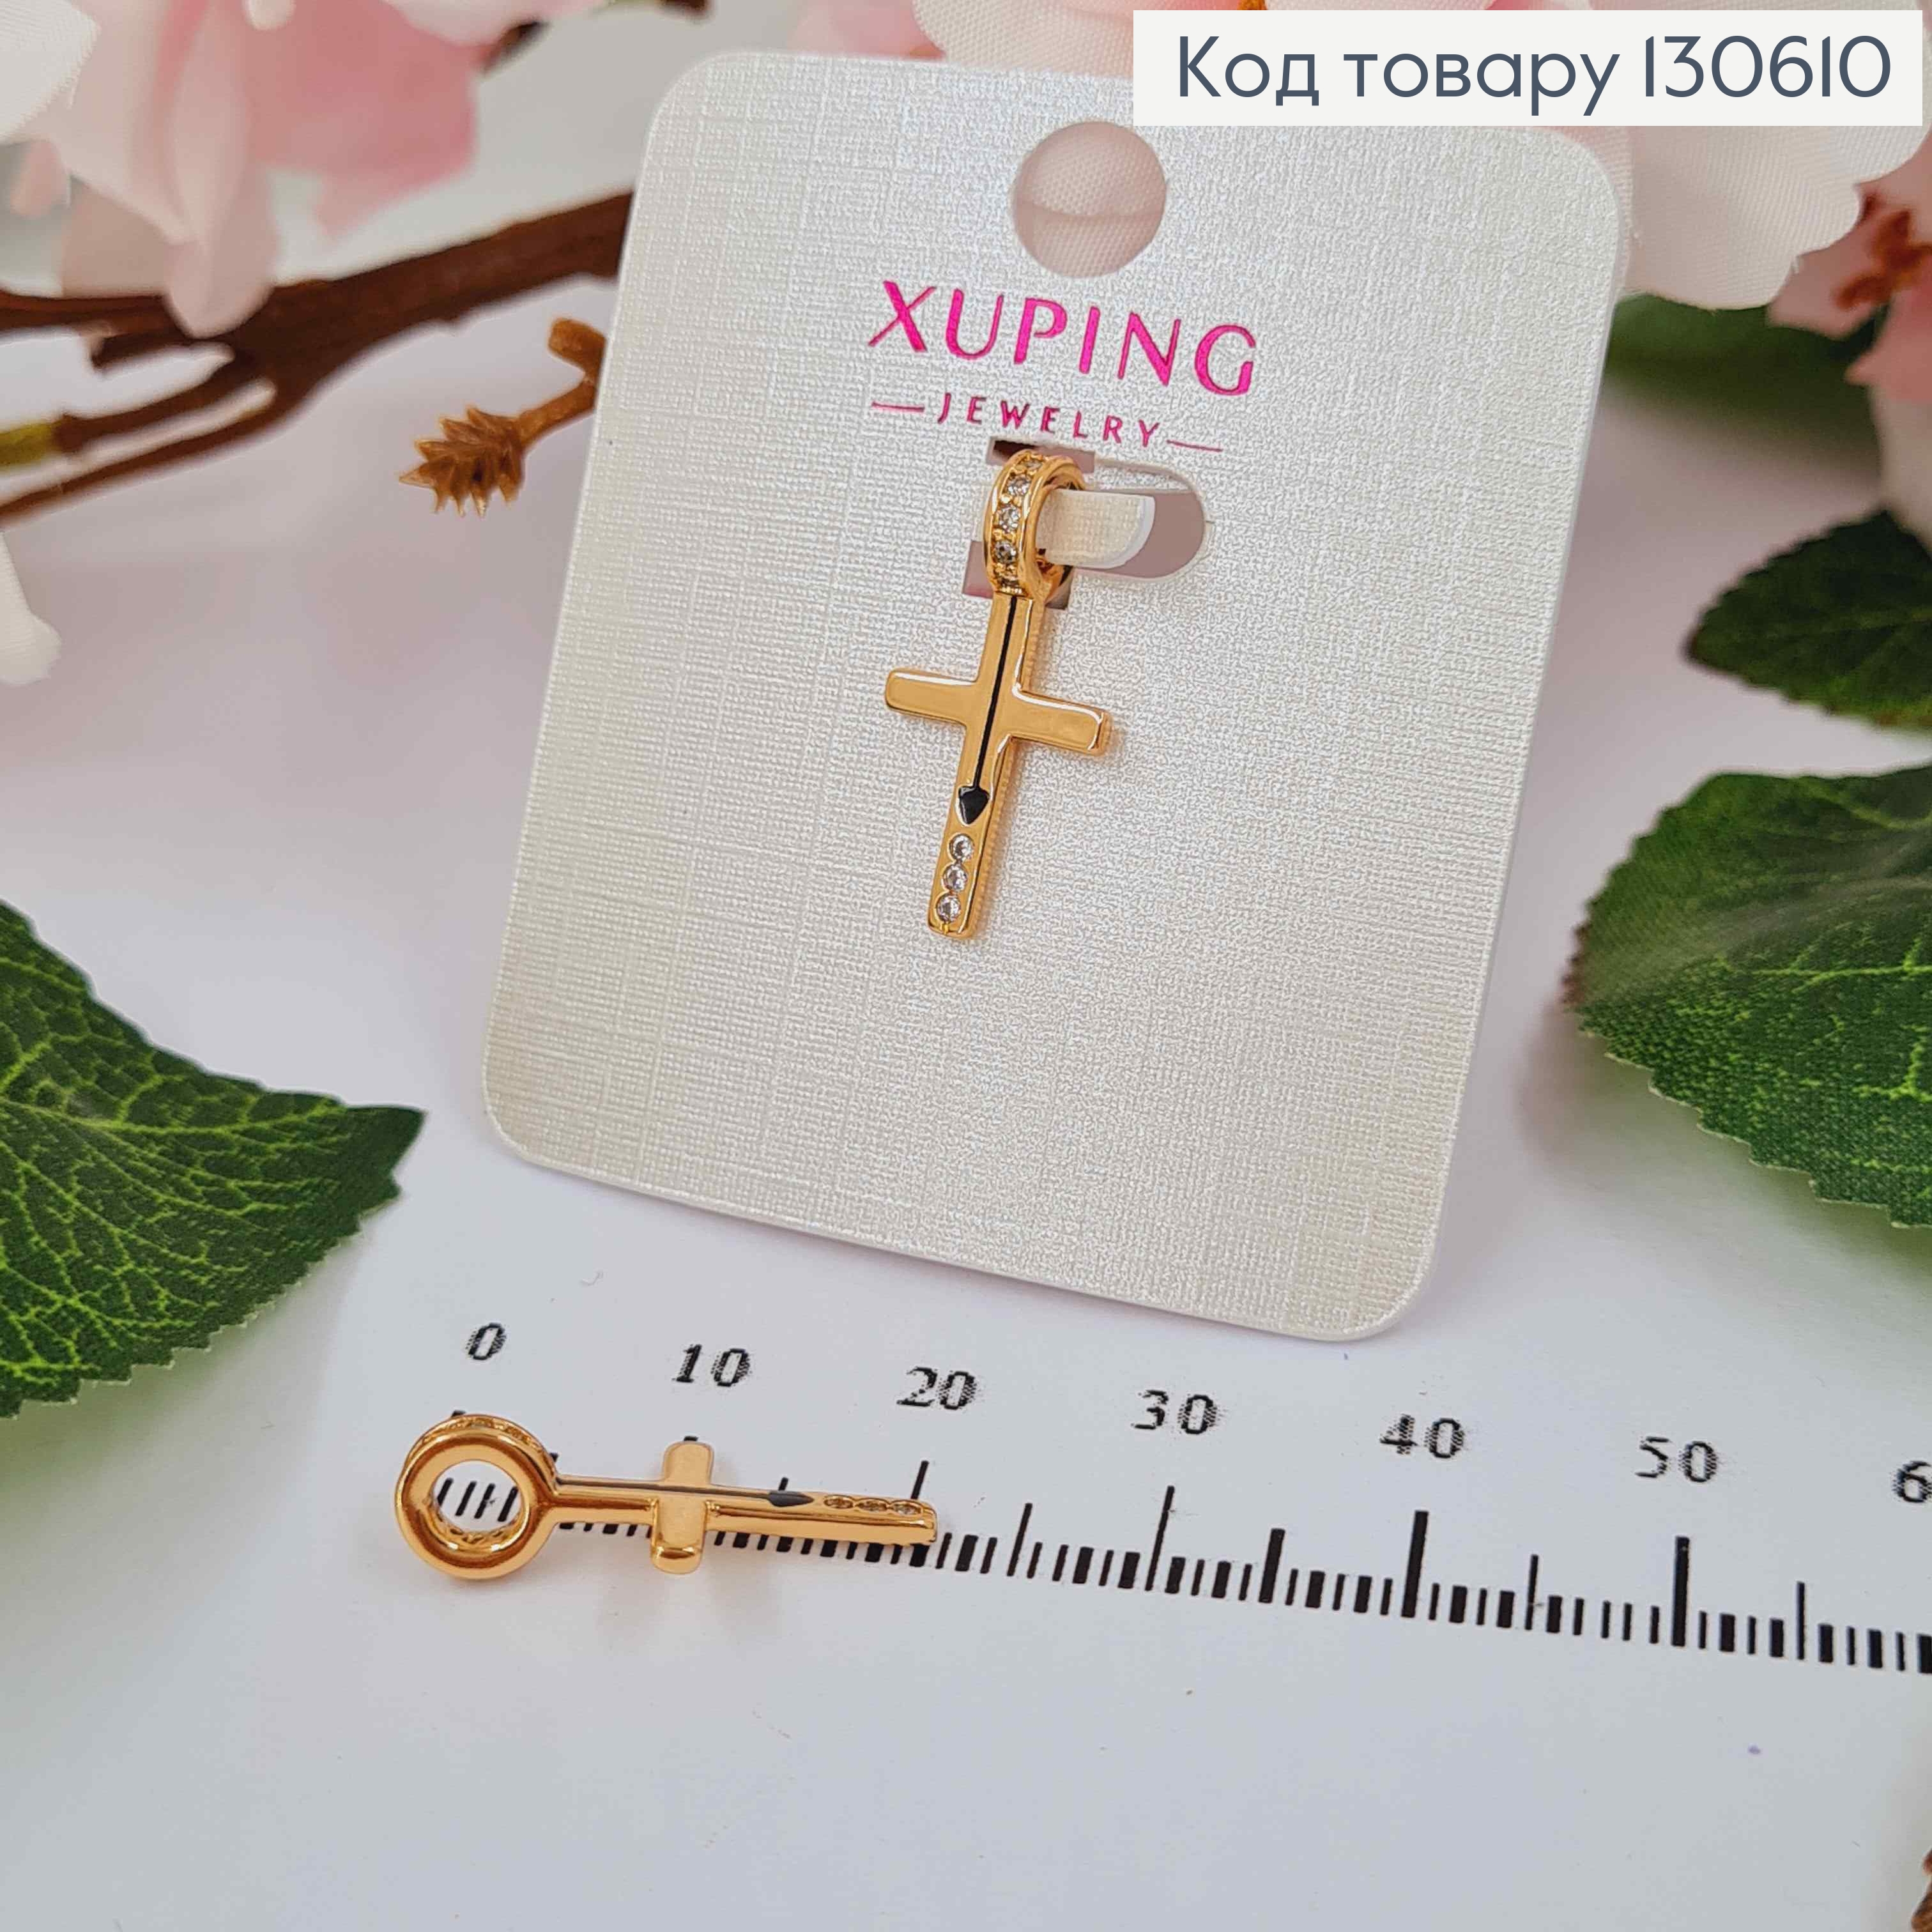 Крестик со стрелочкой и камешками, размер с колечком 2*1см Xuping 18K 130610 фото 2